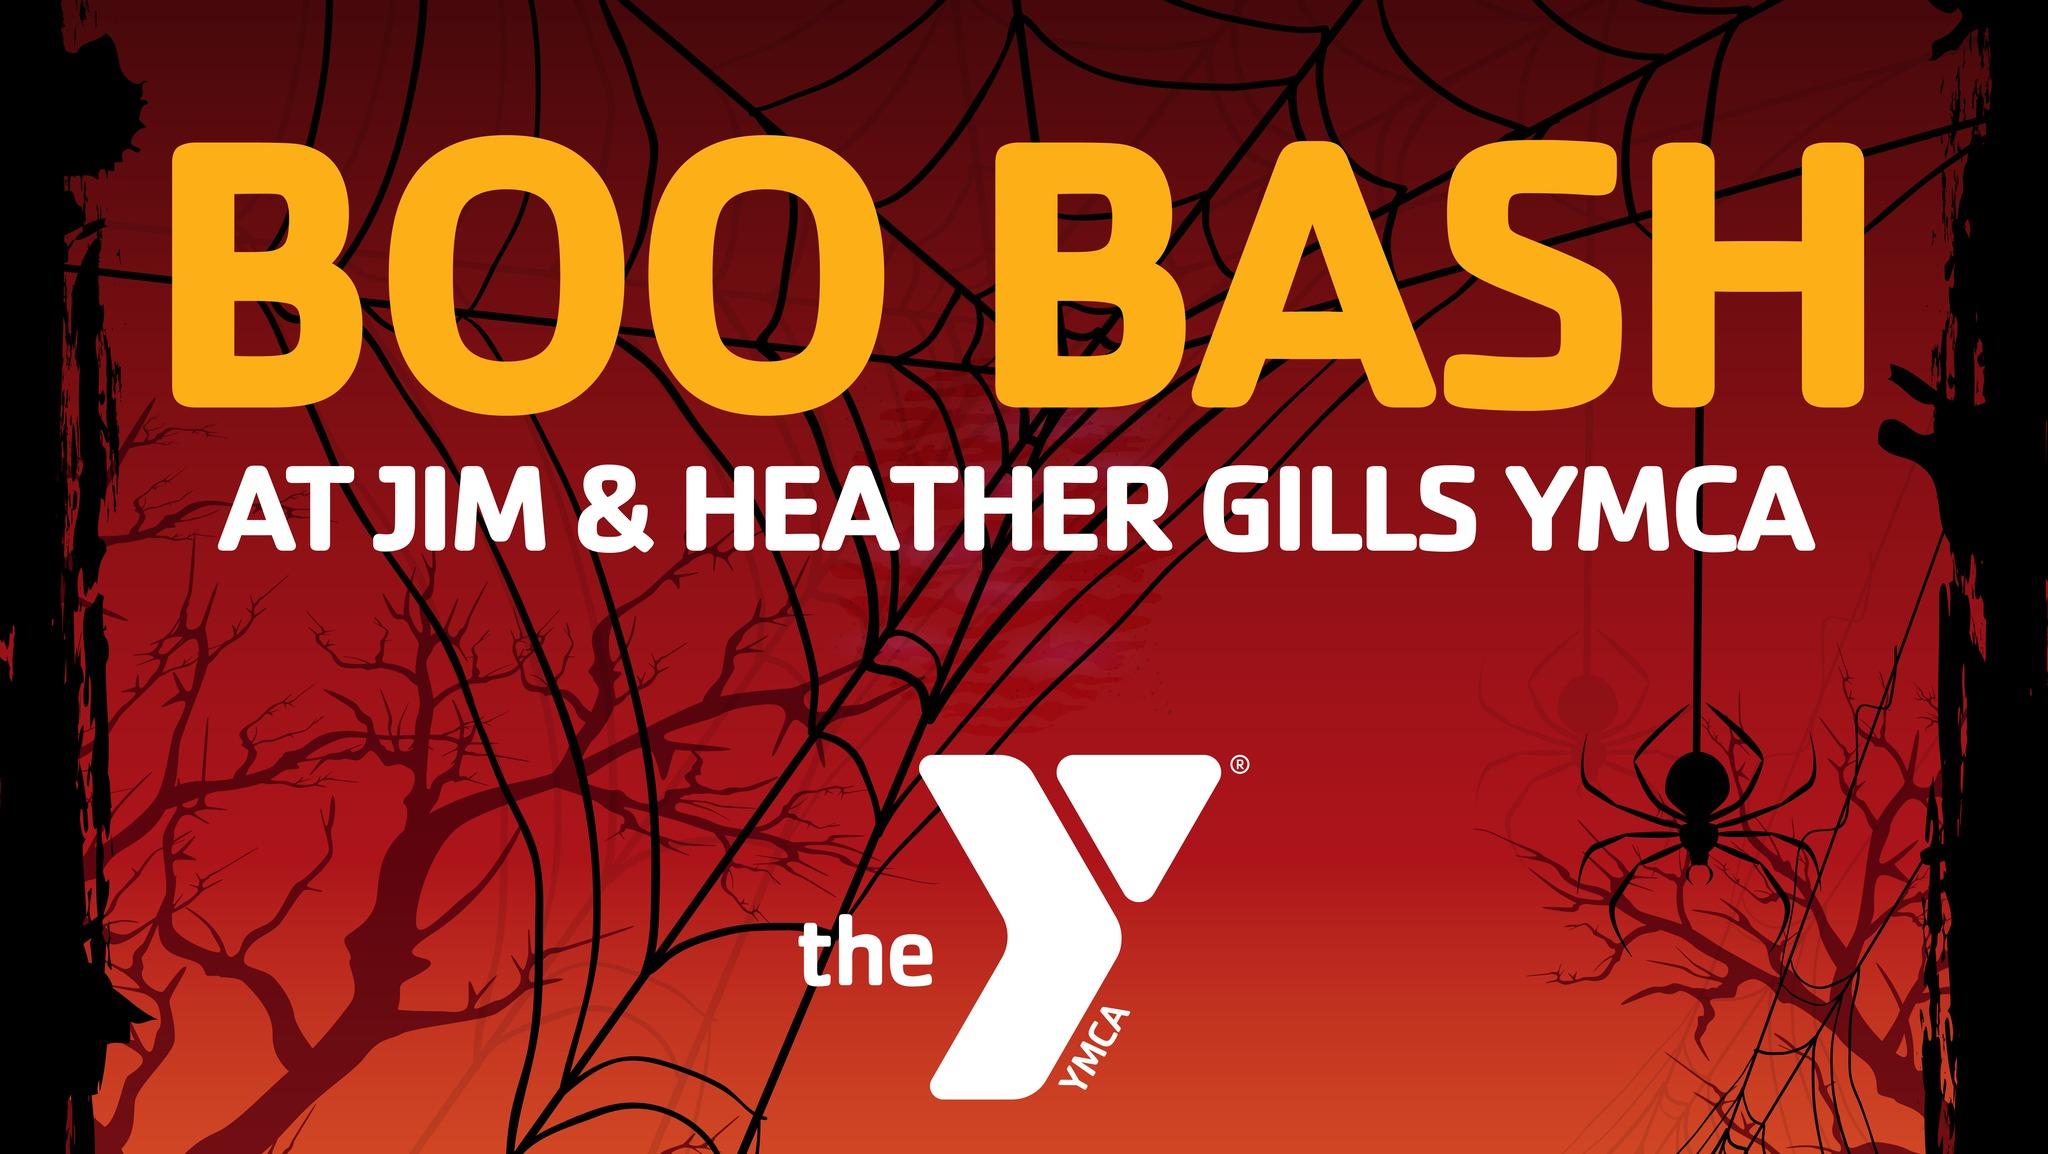 Boo Bash in Jim & Heather Gills YMCA
Fri Oct 28, 5:30 PM - Fri Oct 28, 7:30 PM
in 8 days